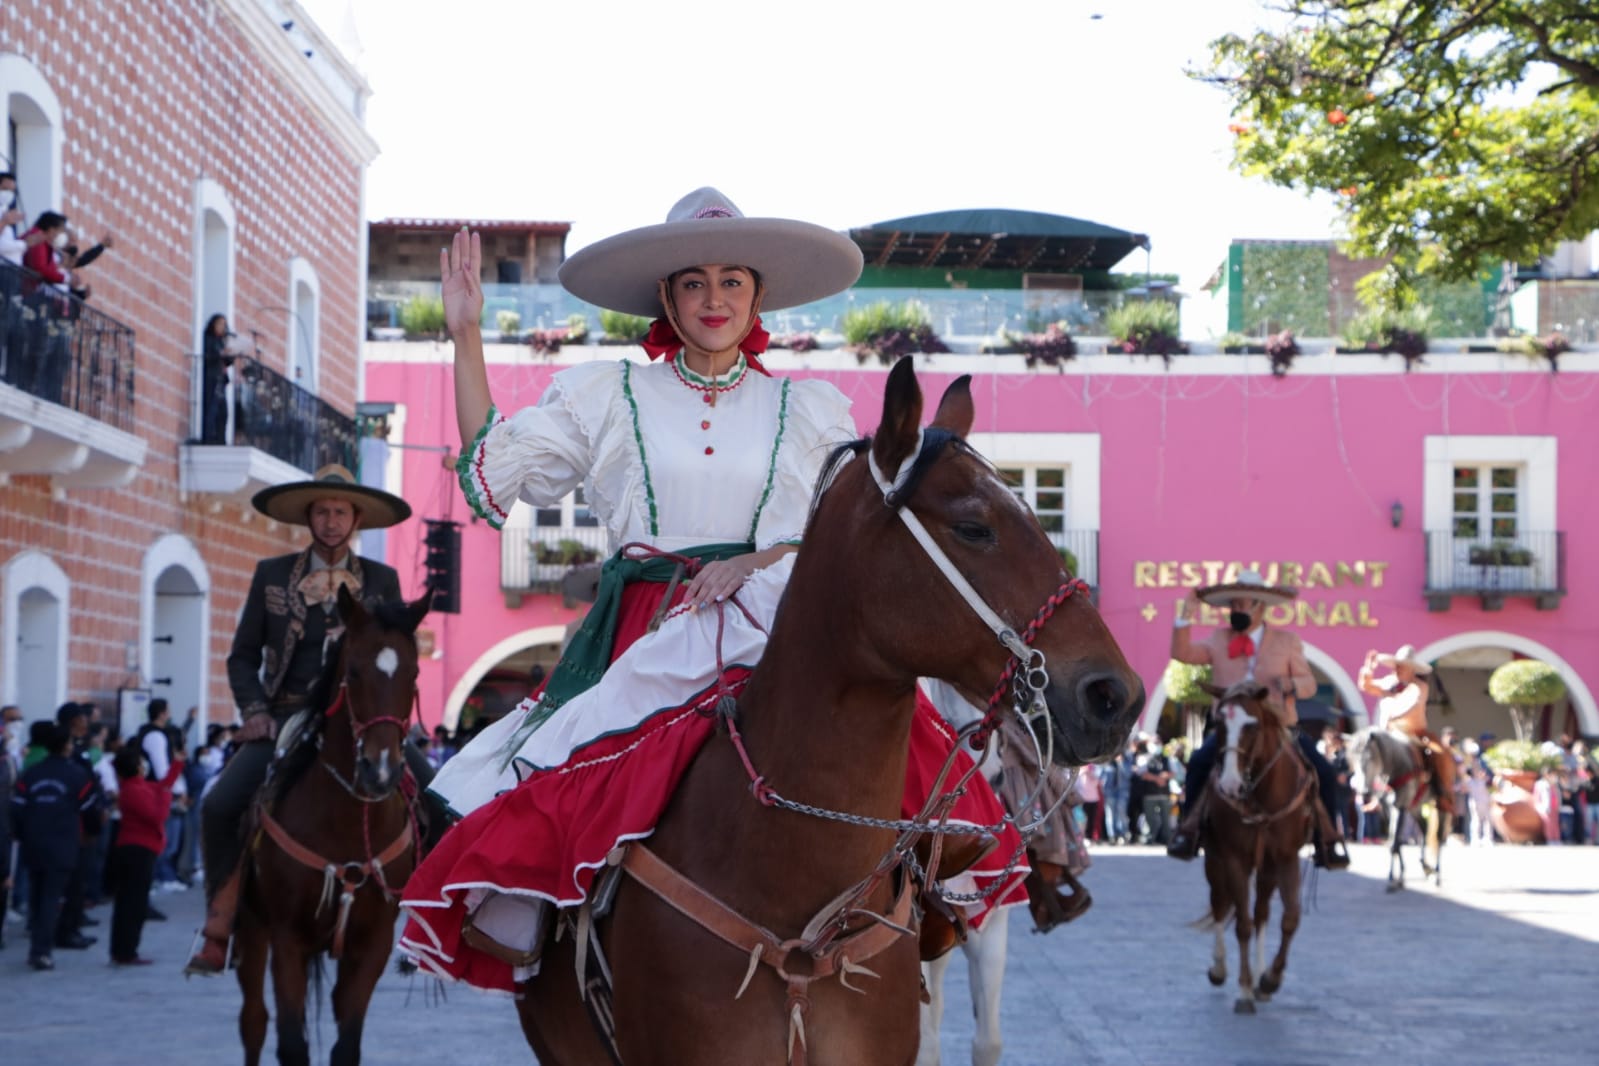  En Atlixco realizan desfile conmemorativo por la Revolución Mexicana 